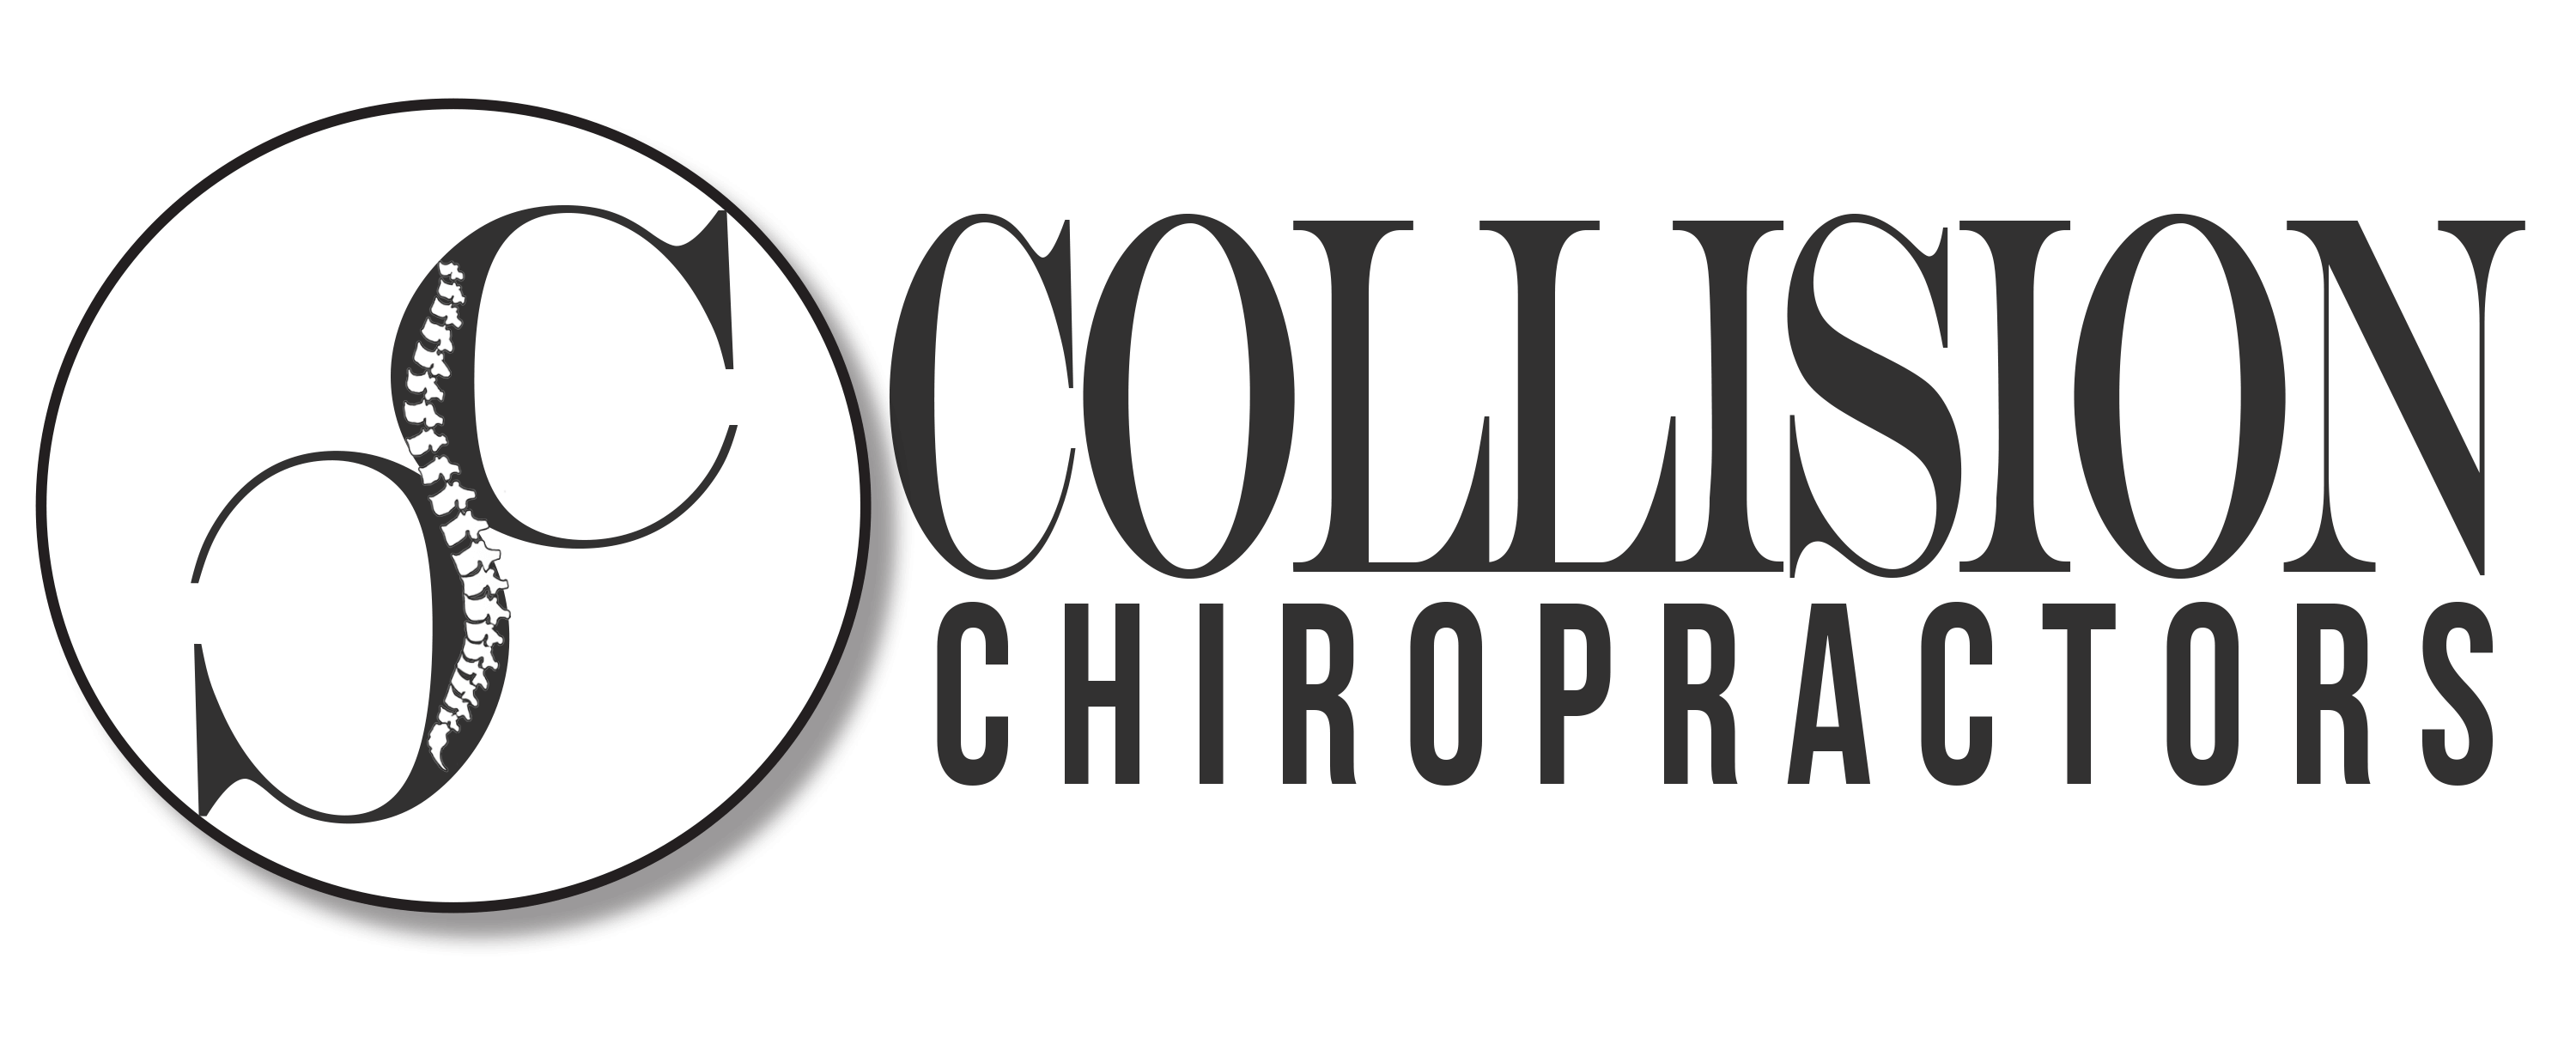 Collision Chiropractors